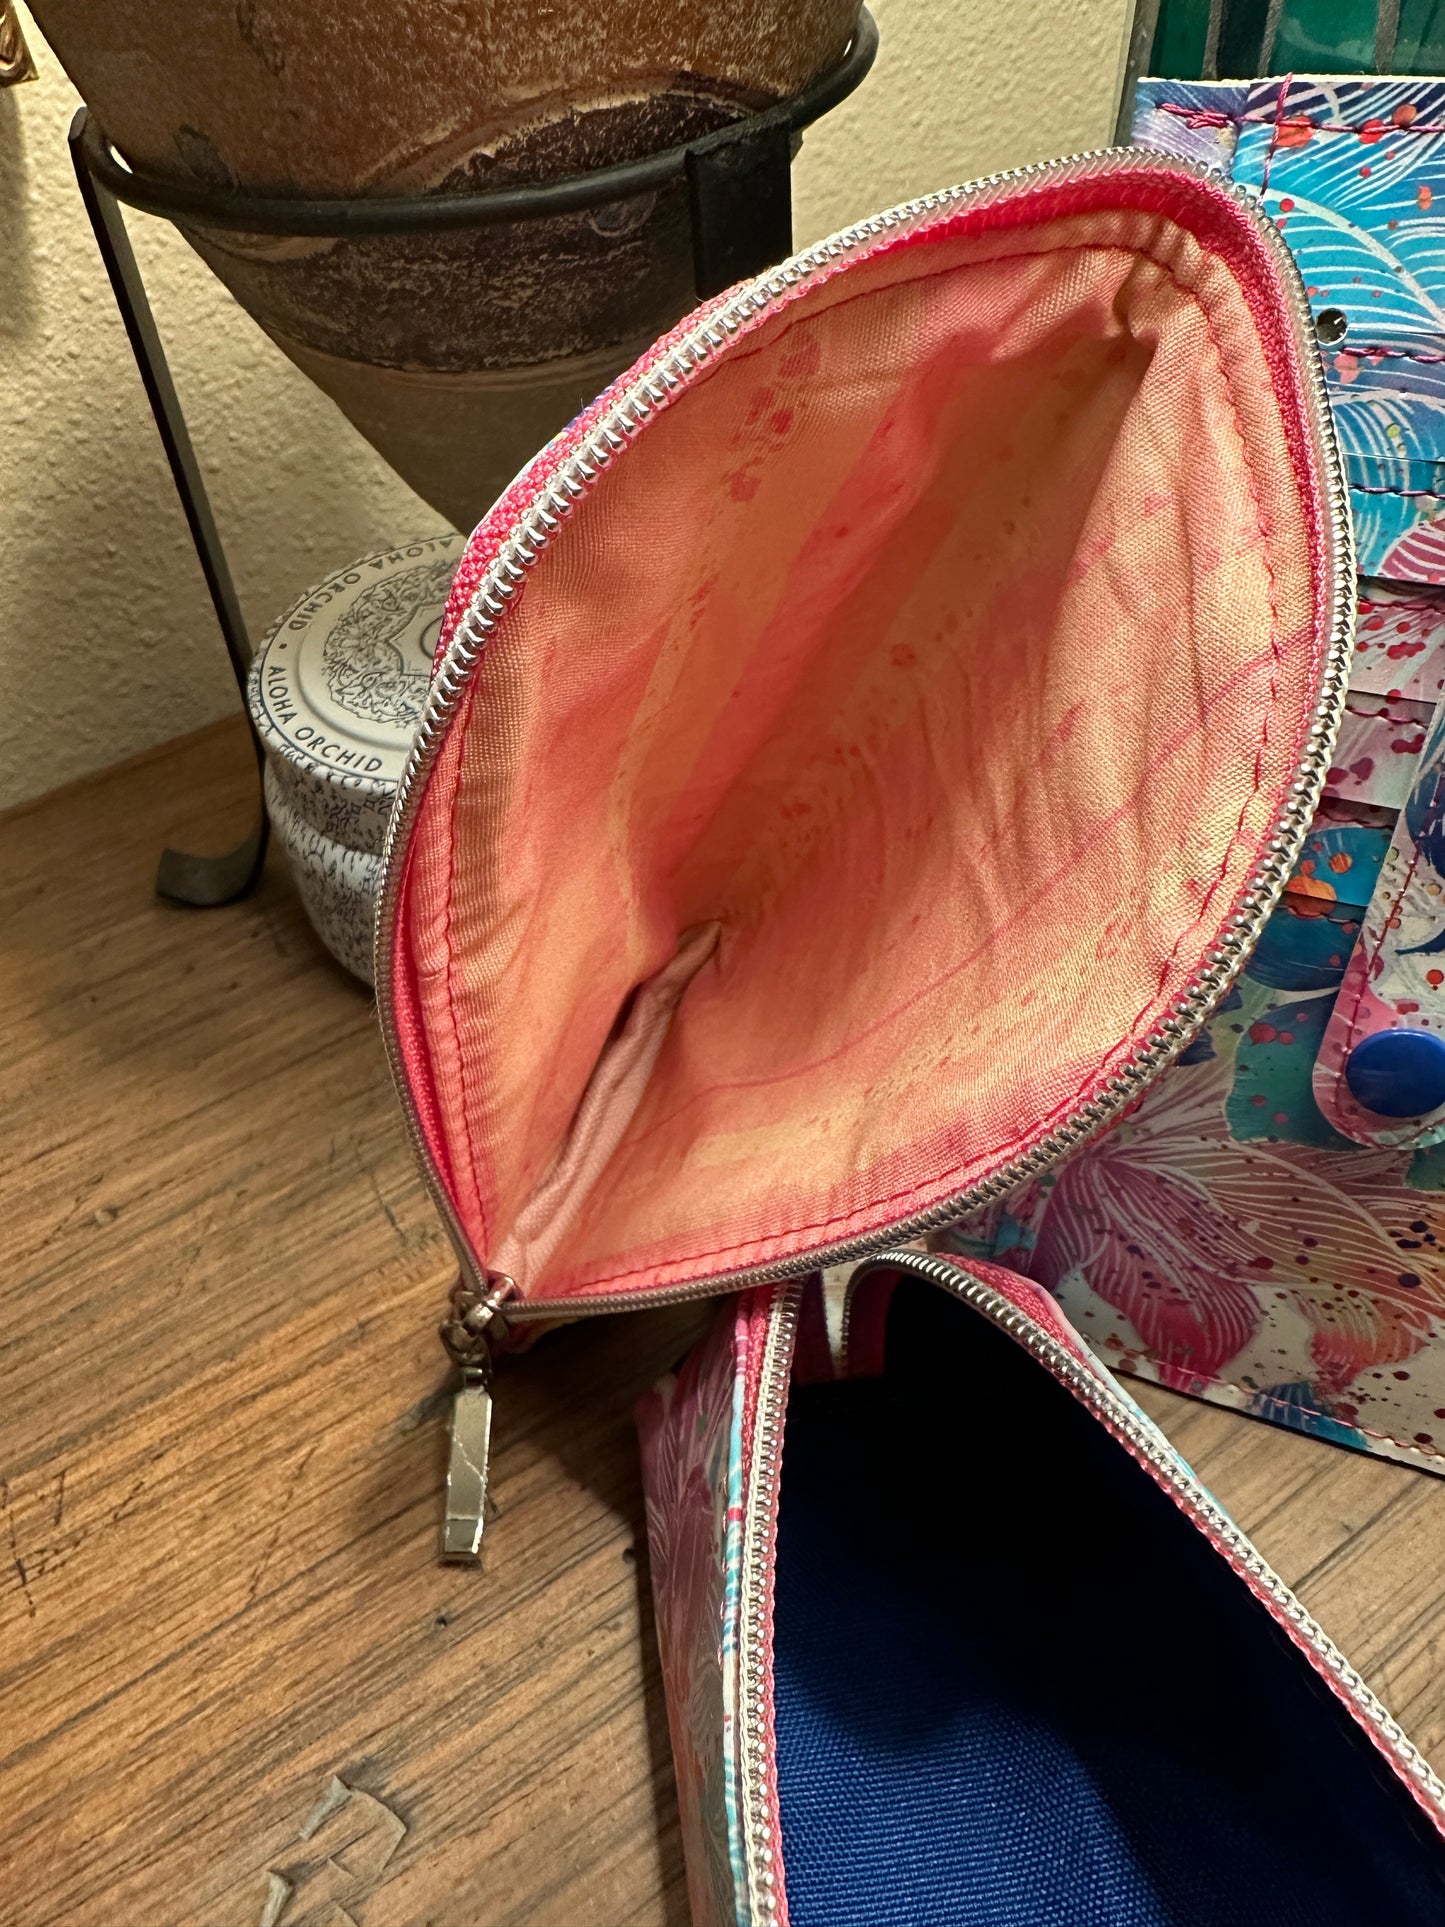 Handbag Purse Set Wallet Pouch & Eye (Sun) glass Case